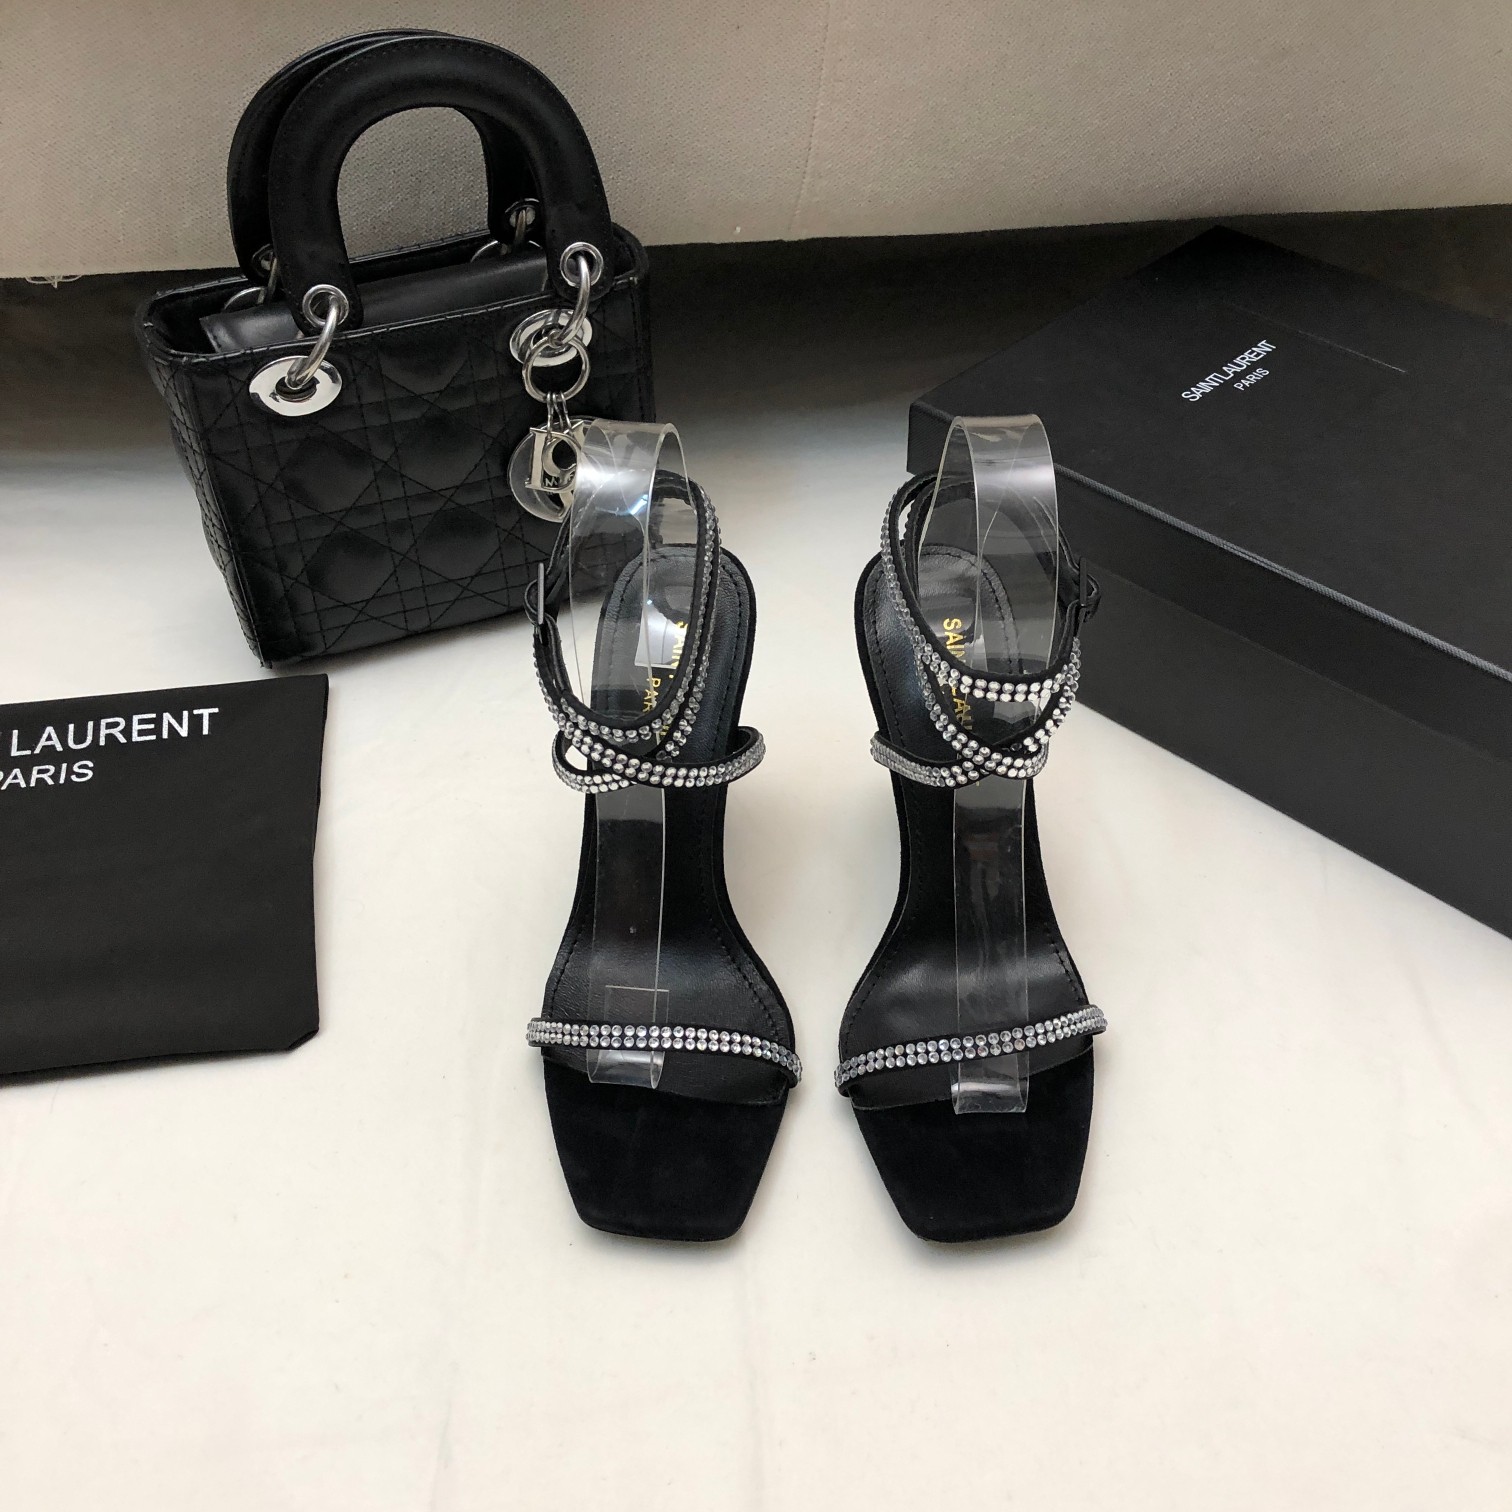 Yves Saint Laurent Shoes High Heel Pumps Sandals Black White Genuine Leather Goat Skin Sheepskin Spring Collection